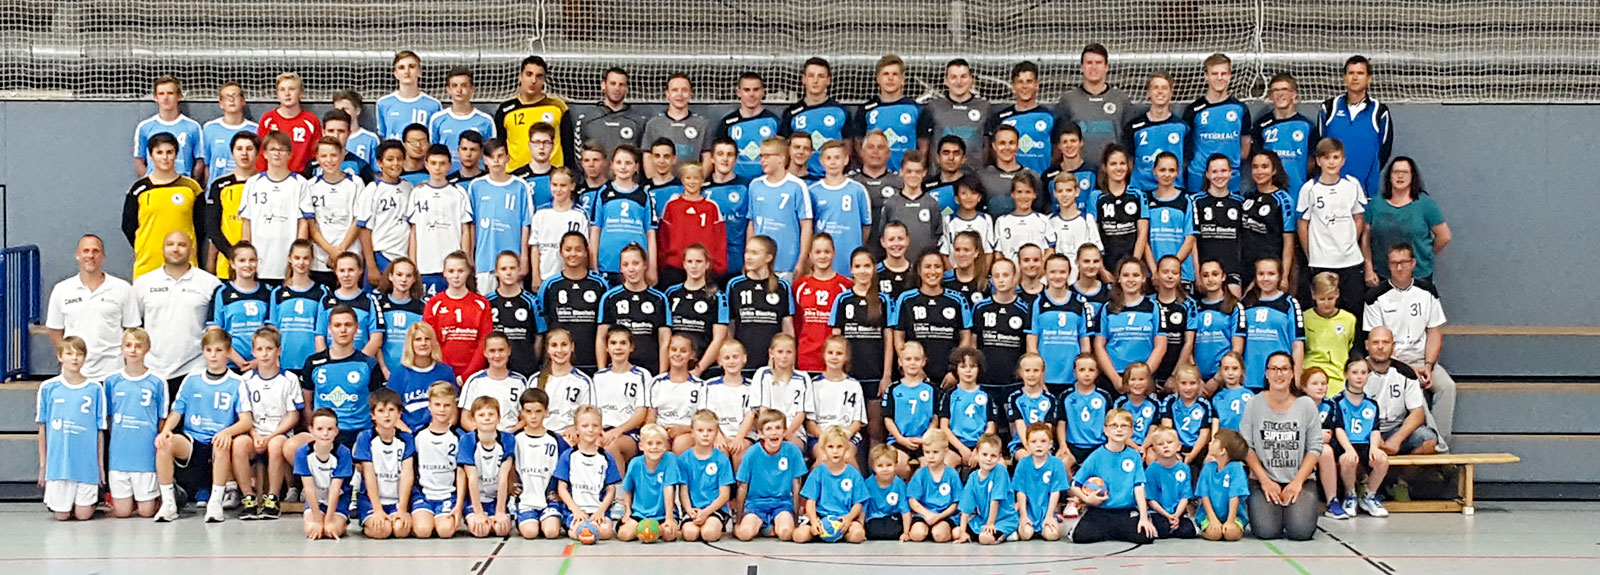 Jugendabteilung Handball des TV Schriesheim